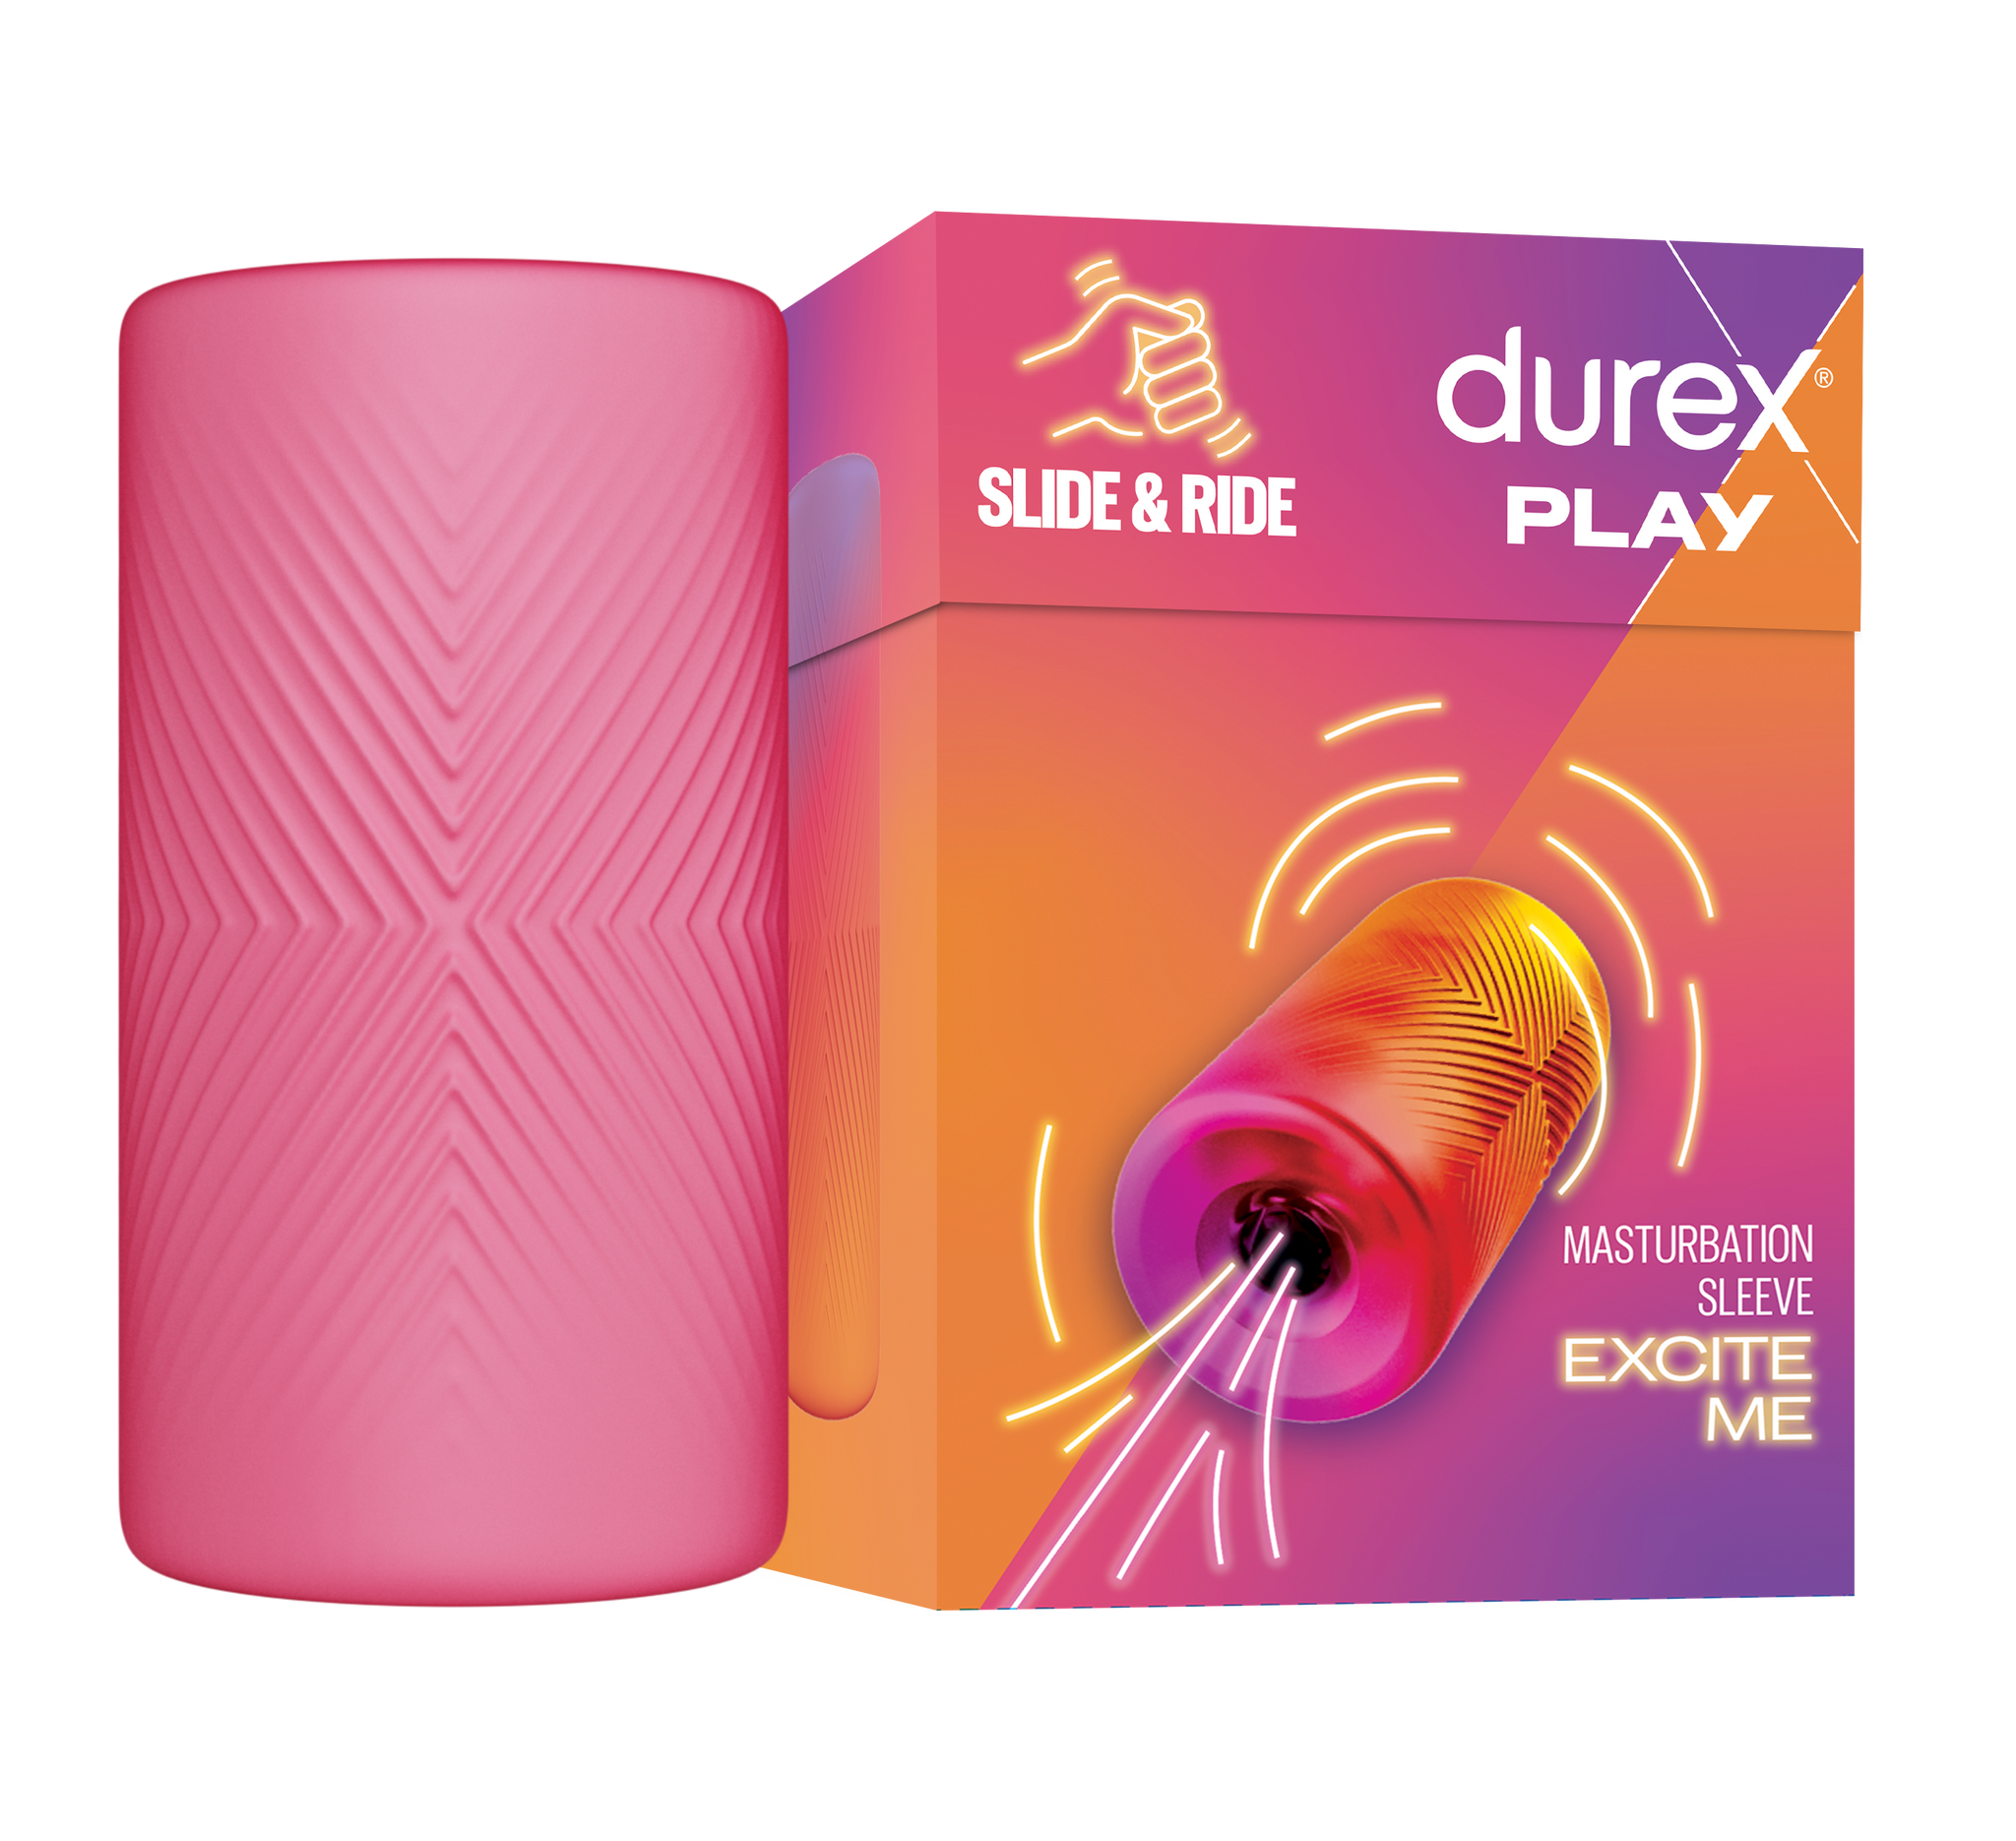 Durex Masturbation Sleeve, Slide & Ride